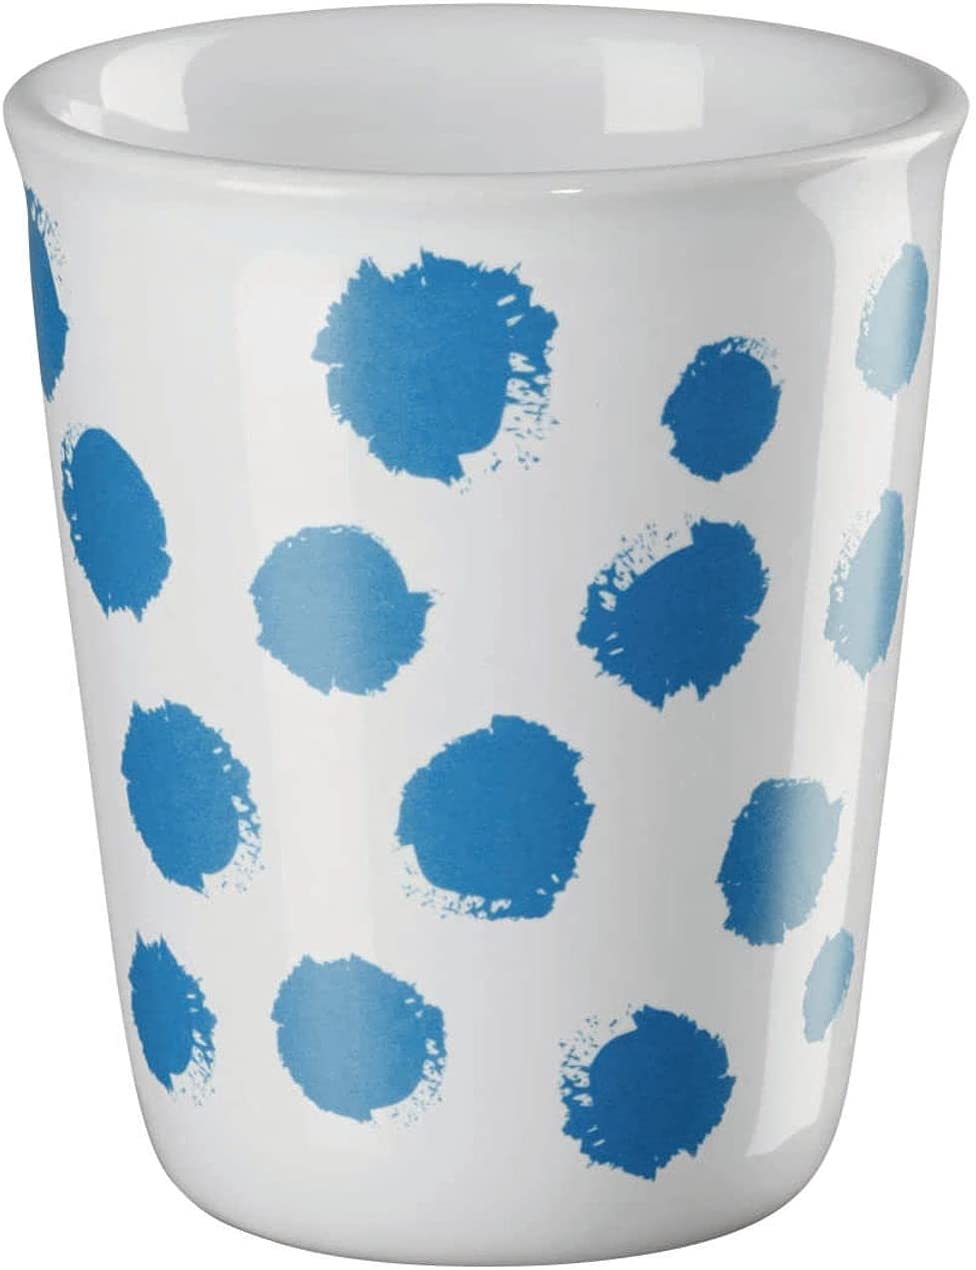 ASA - cup - espresso - white/blue/polka dots - porcelain - diameter 6.5 cm x height 7 cm - capacity - 0.1 l.